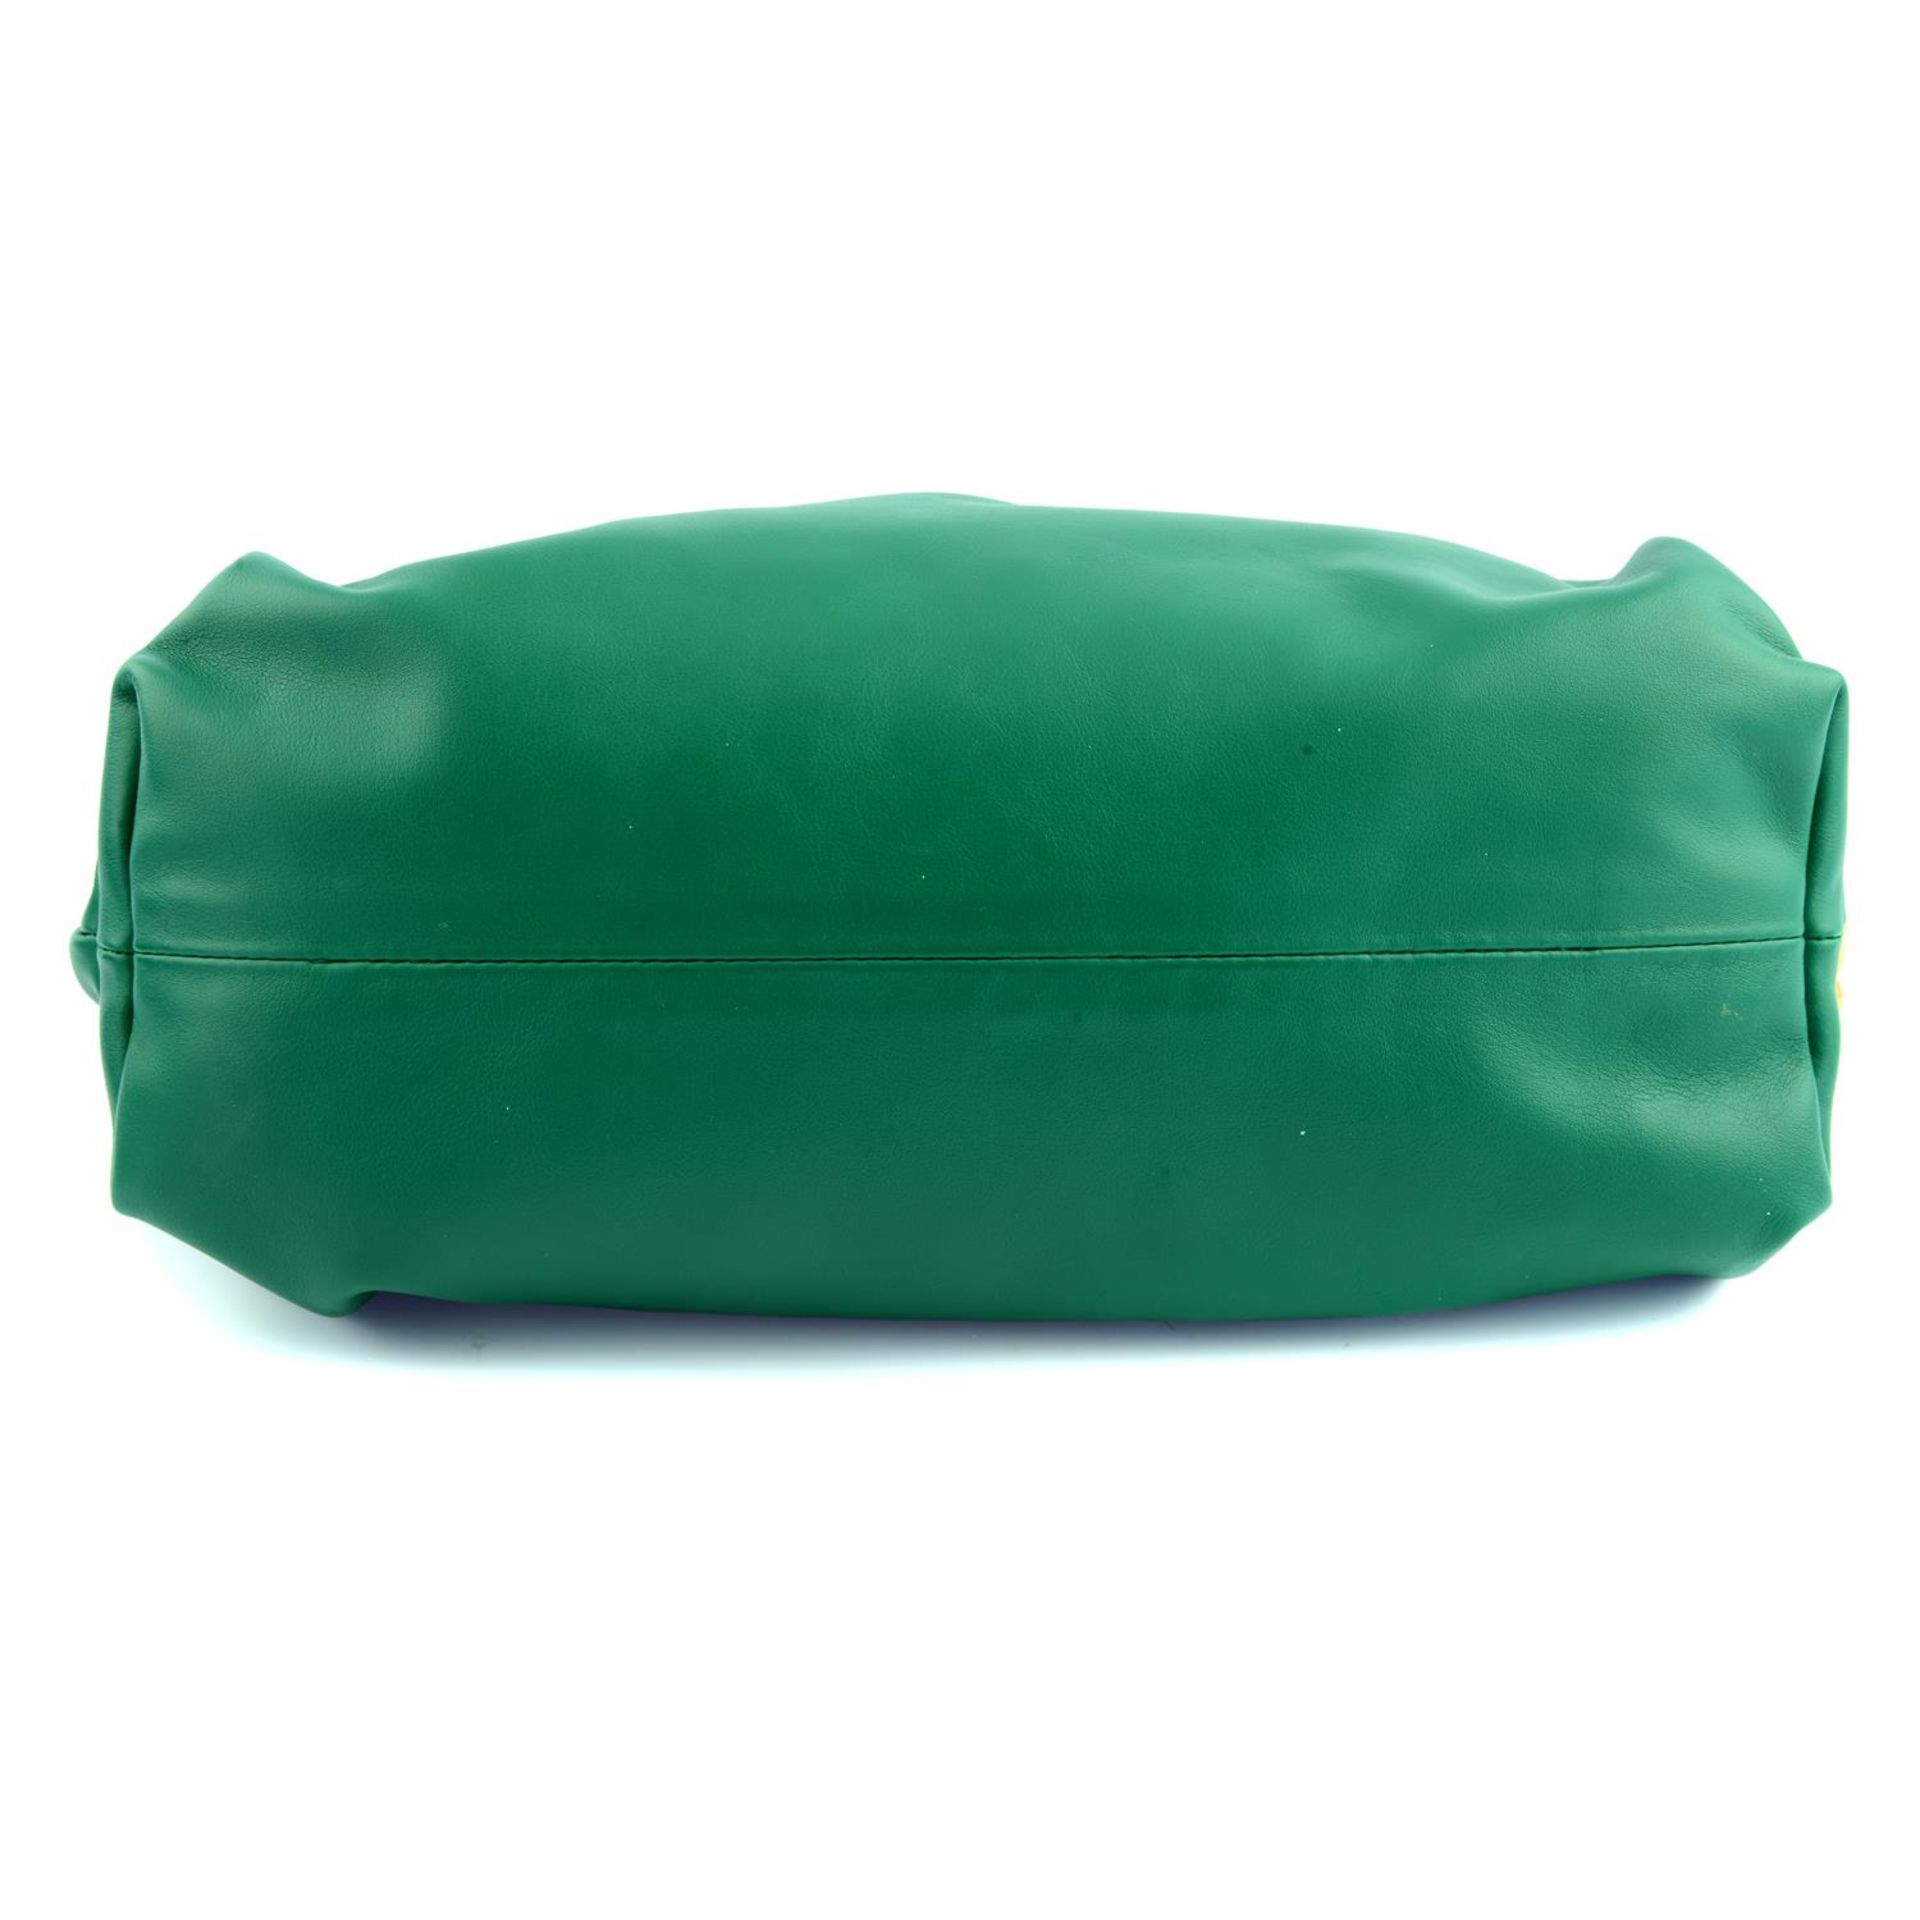 BOTTEGA VENETA - a green leather chain pouch. - Image 4 of 4